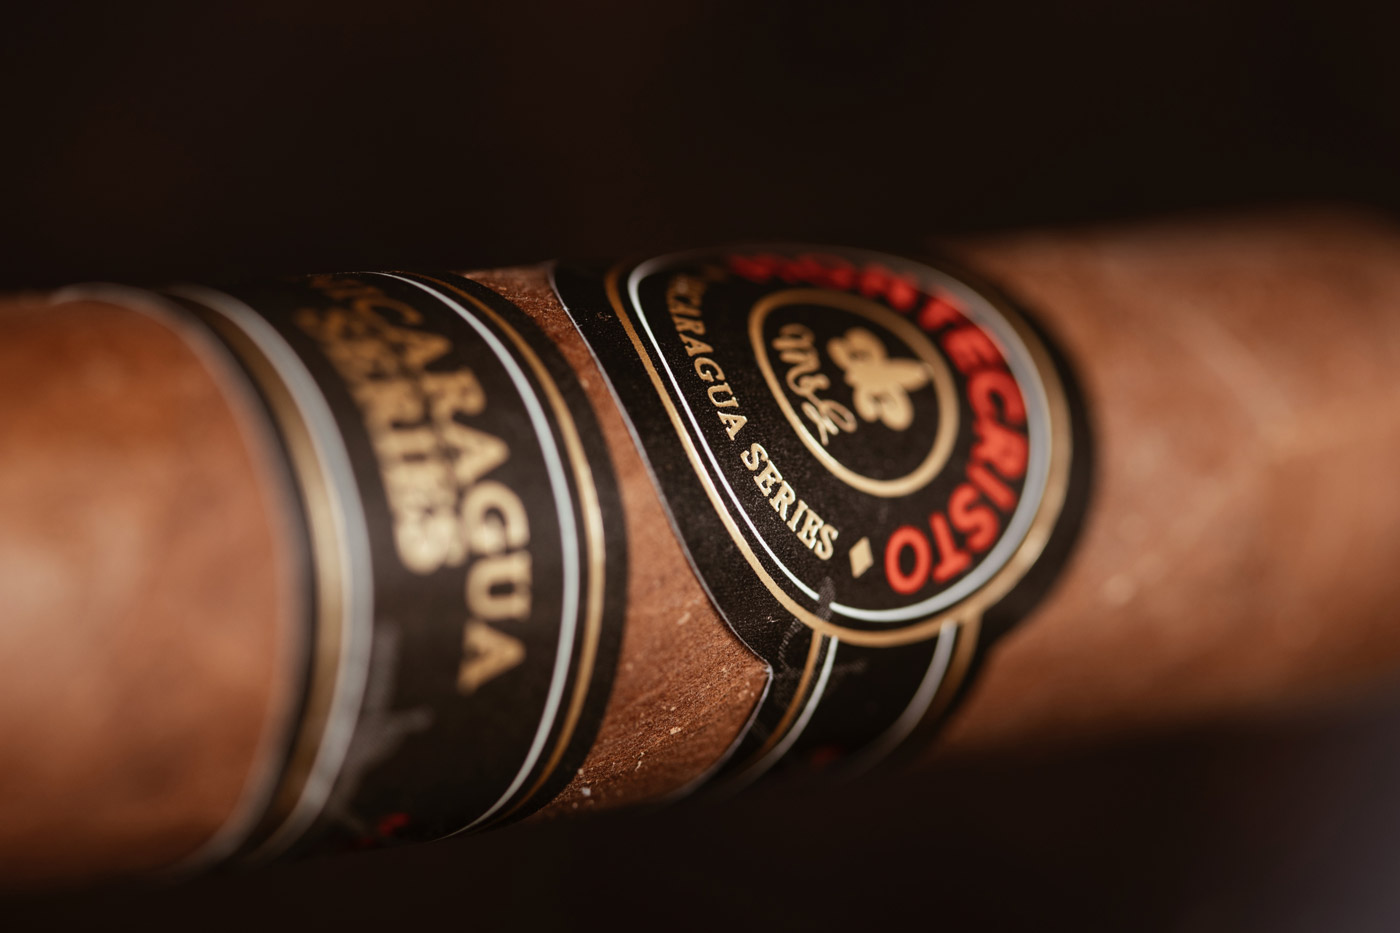 Montecristo Nicaragua Series Toro cigar review